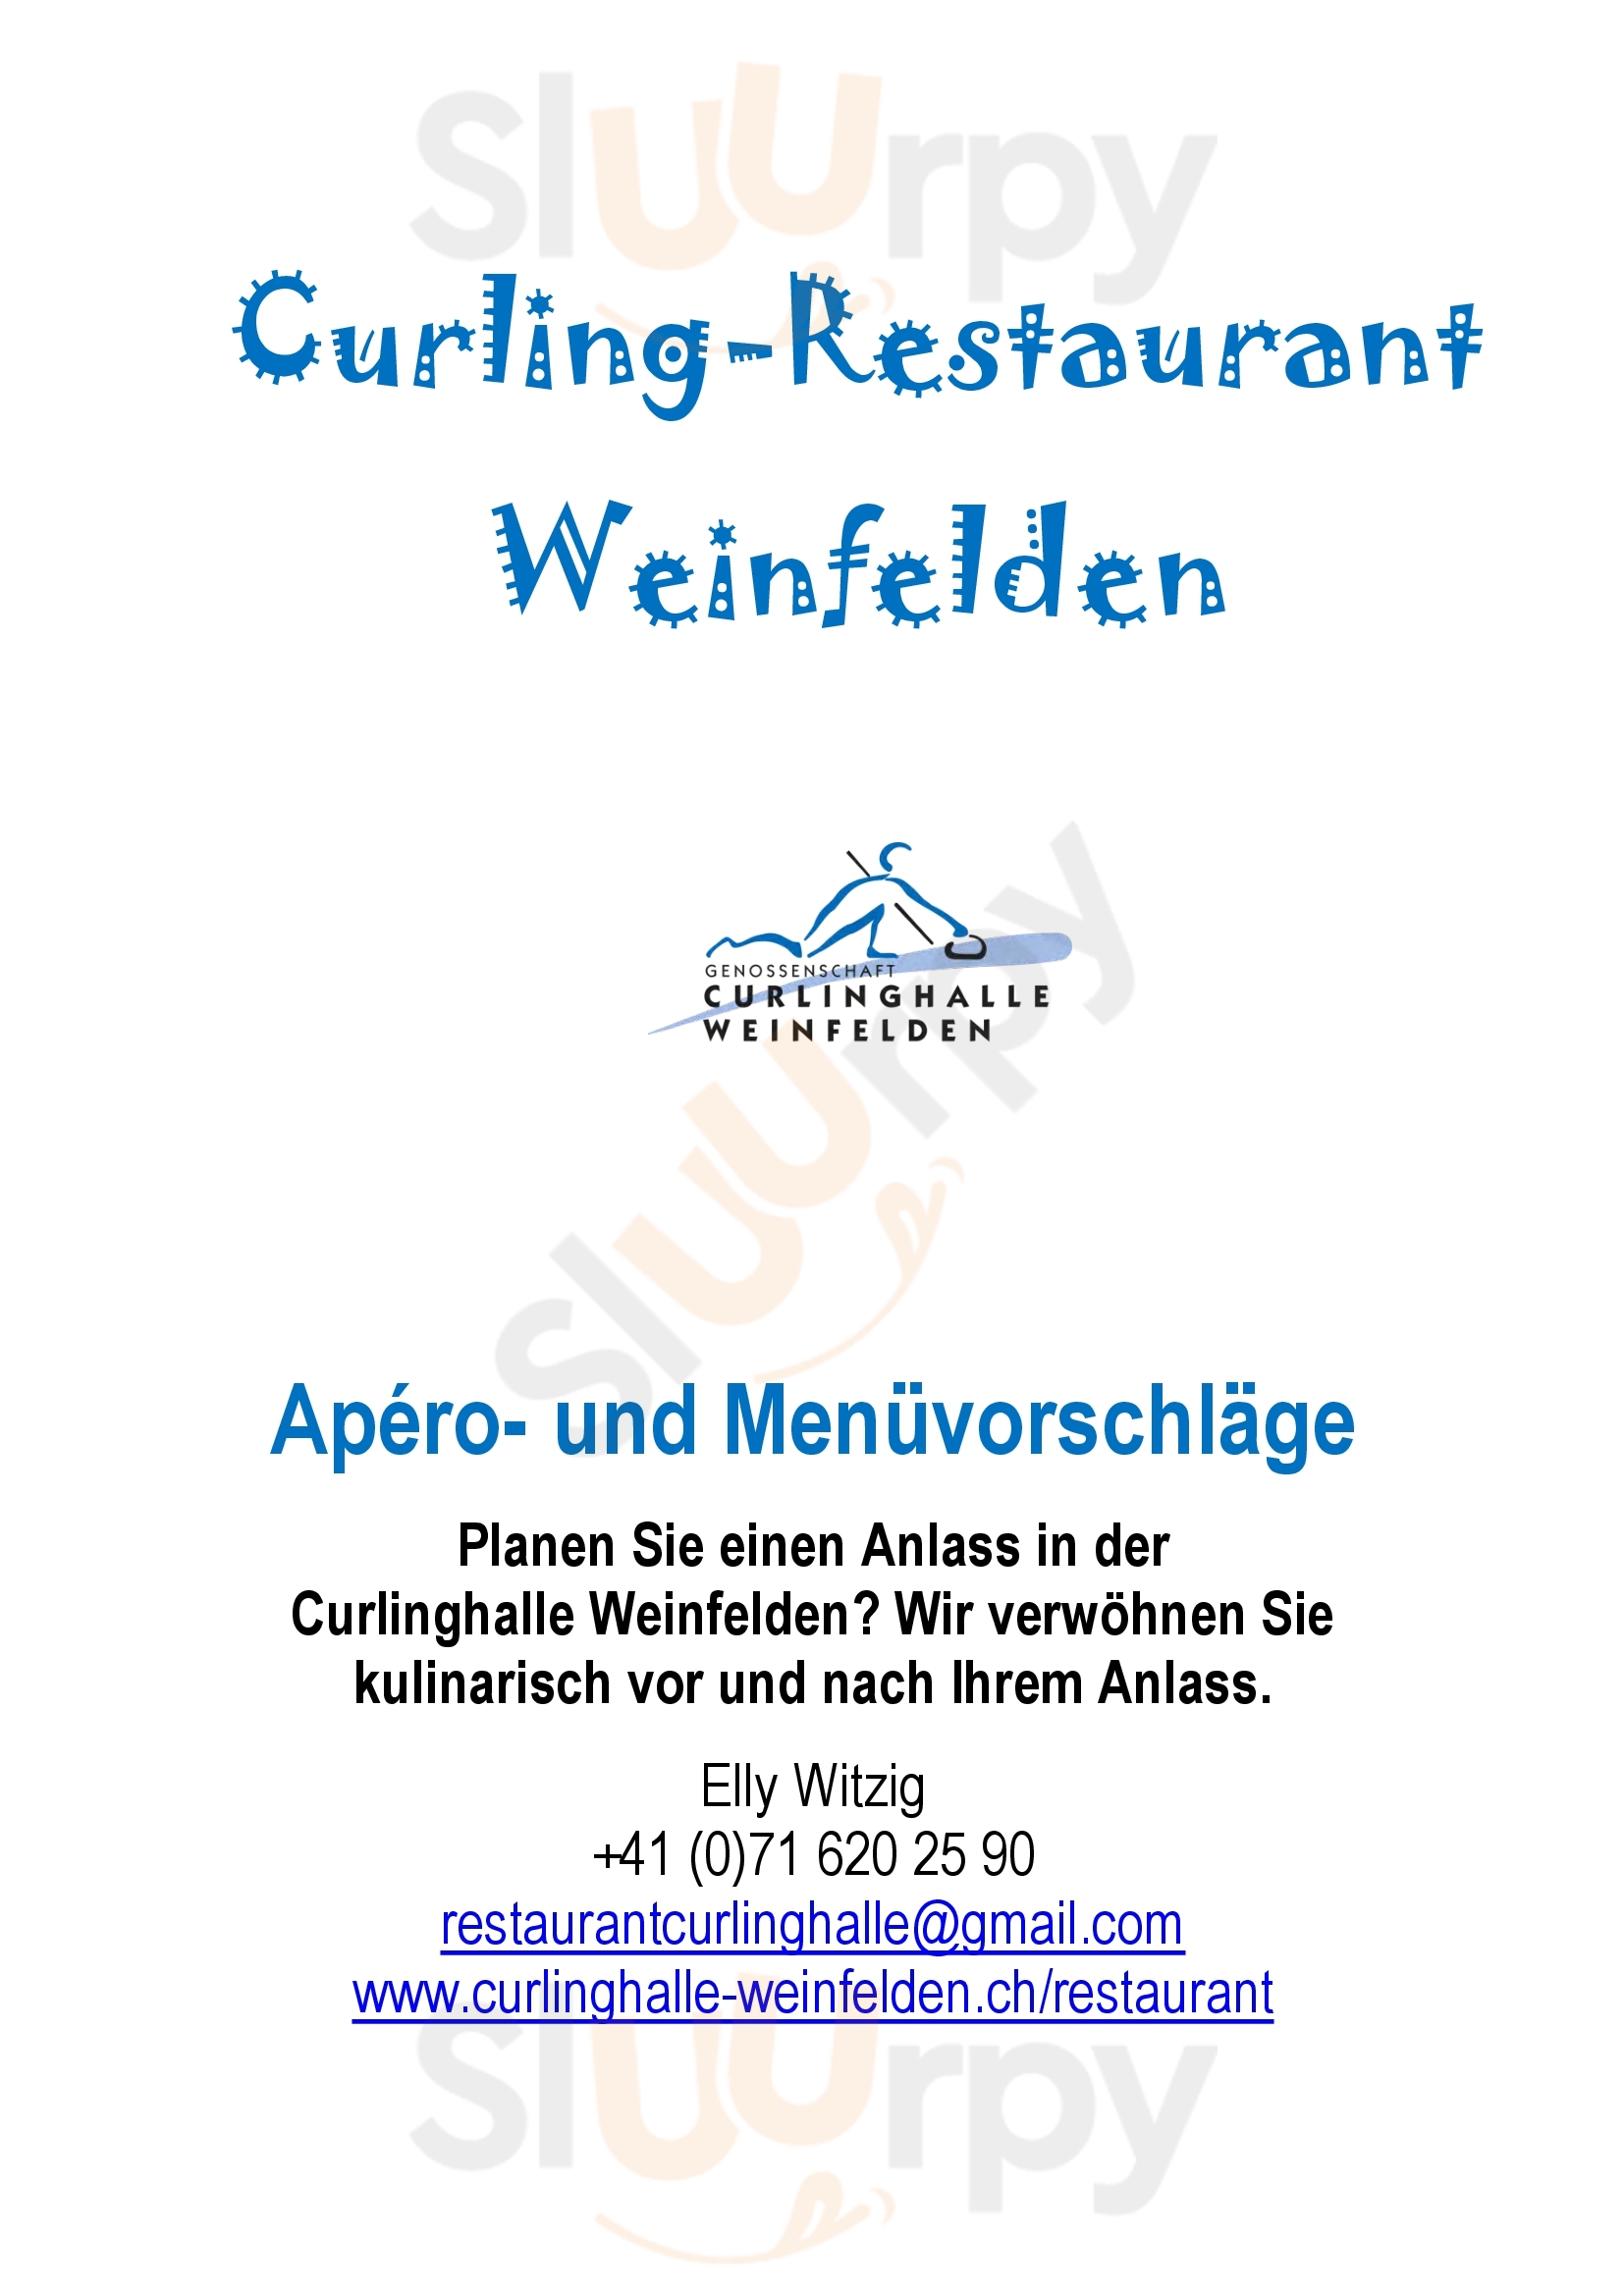 Restaurant Curlinghalle Weinfelden Menu - 1